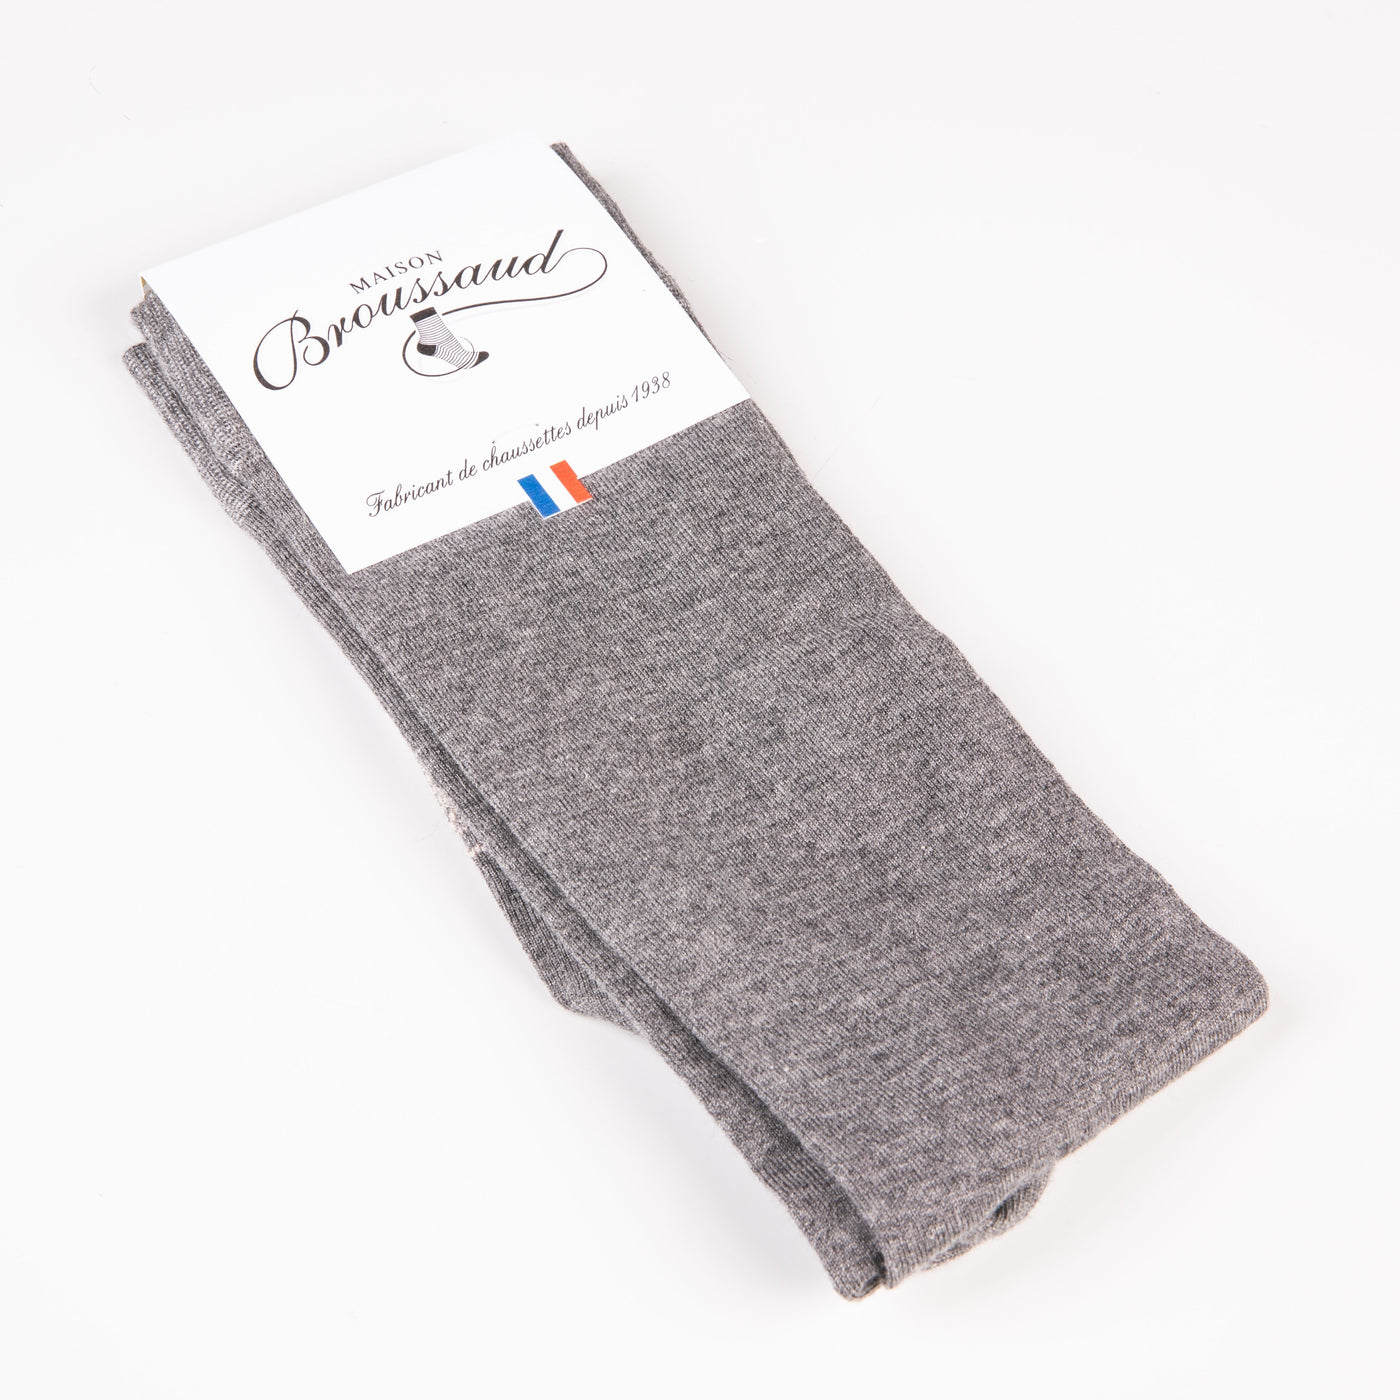 Men's silk socks, refinement - Maison Broussaud